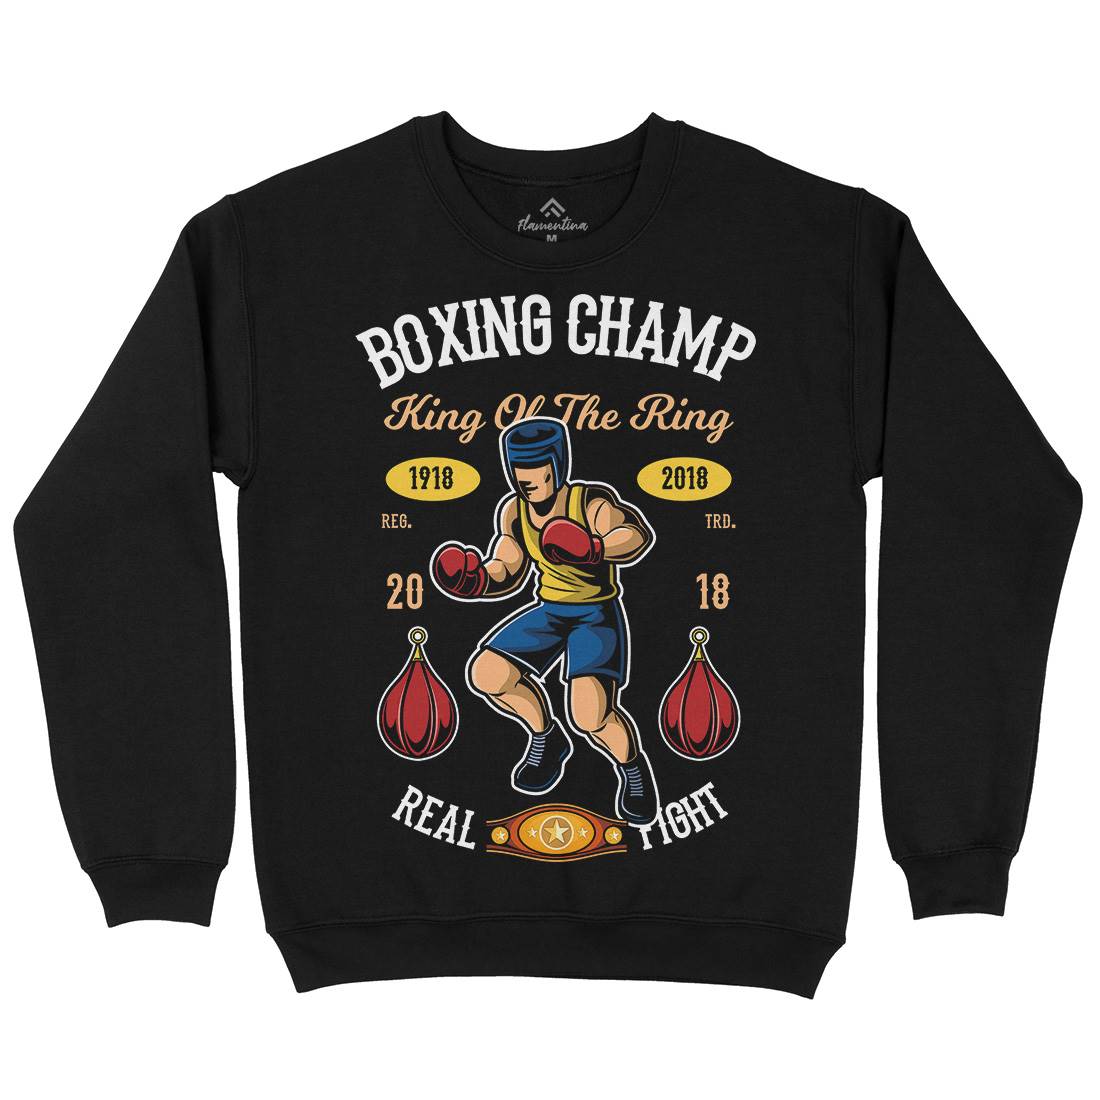 Boxing Champ Kids Crew Neck Sweatshirt Sport C323